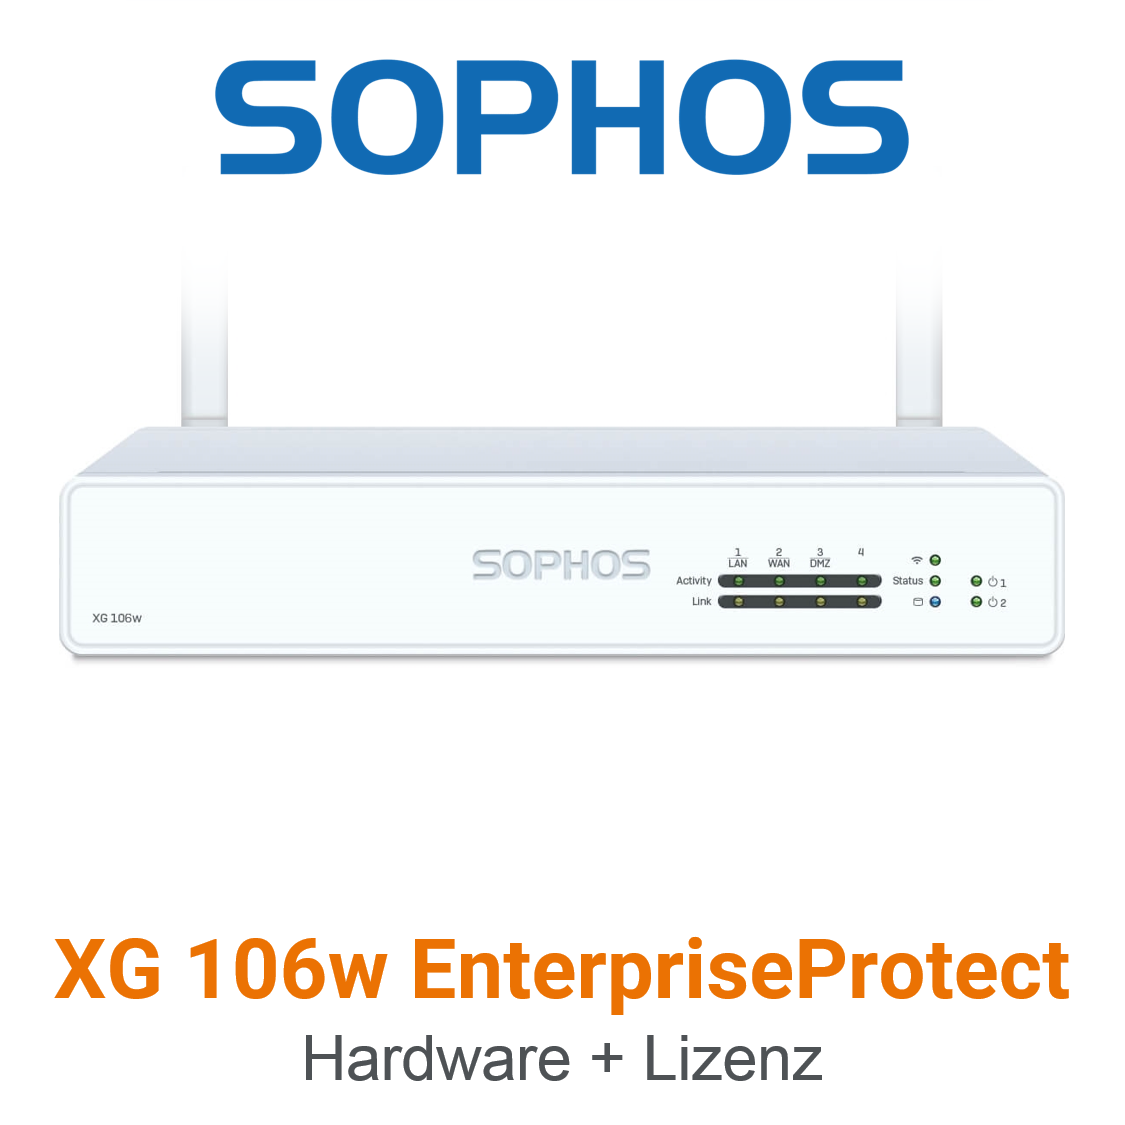 Sophos XG 106w EnterpriseProtect Bundle (Hardware + Lizenz) (End of Sale/Life)